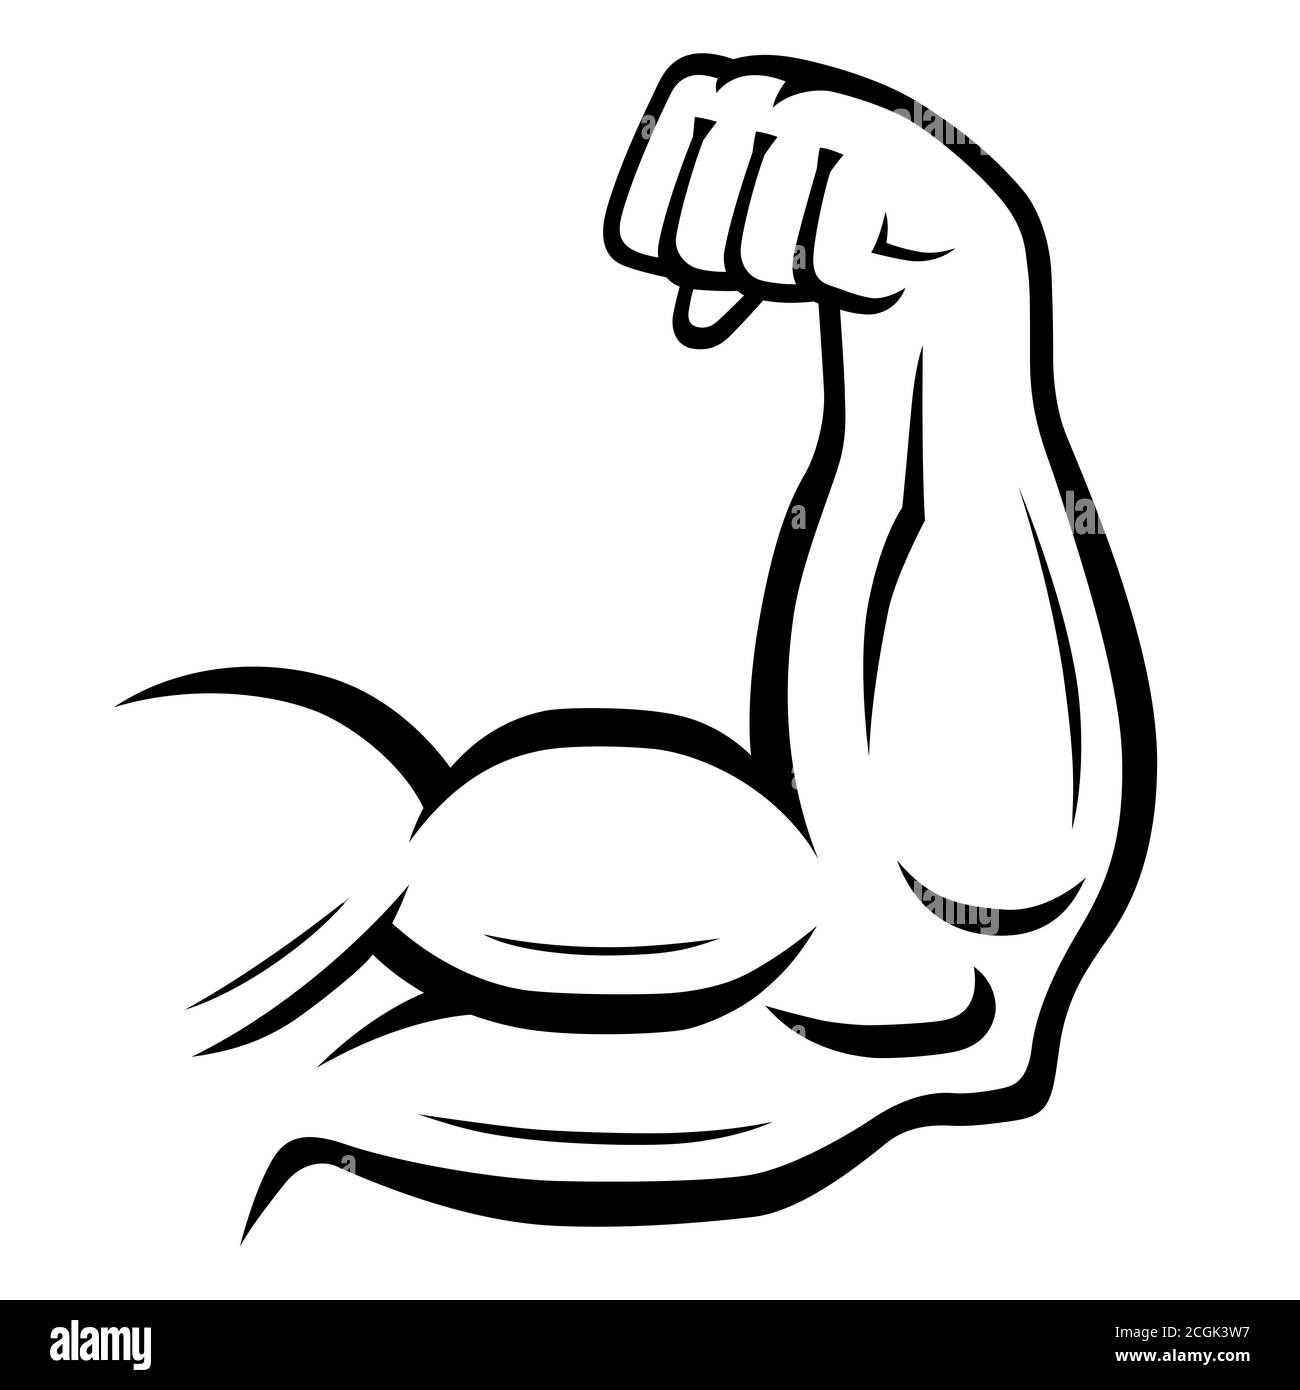 https://c8.alamy.com/comp/2CGK3W7/strong-arm-icon-fitness-bodybuilding-concept-2CGK3W7.jpg